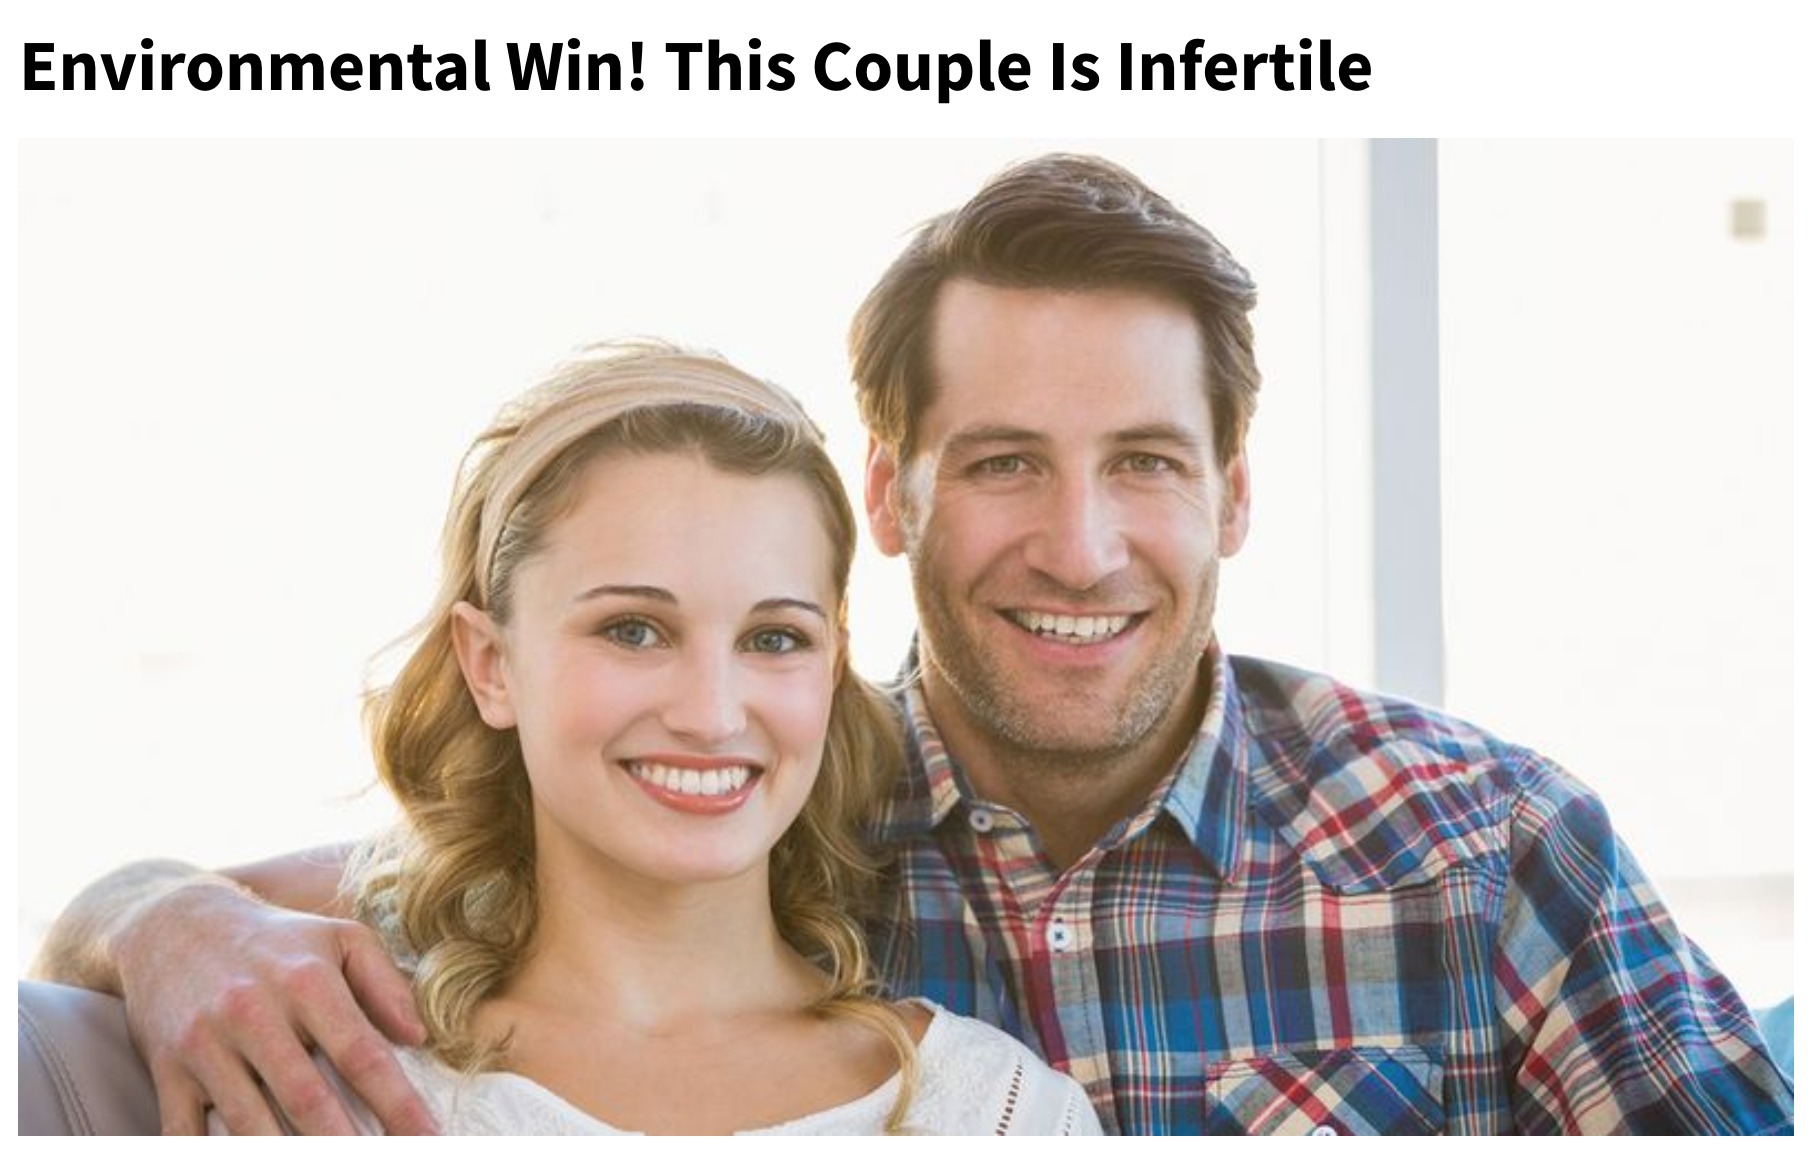 clickhole headlines - Environmental Win! This Couple Is Infertile